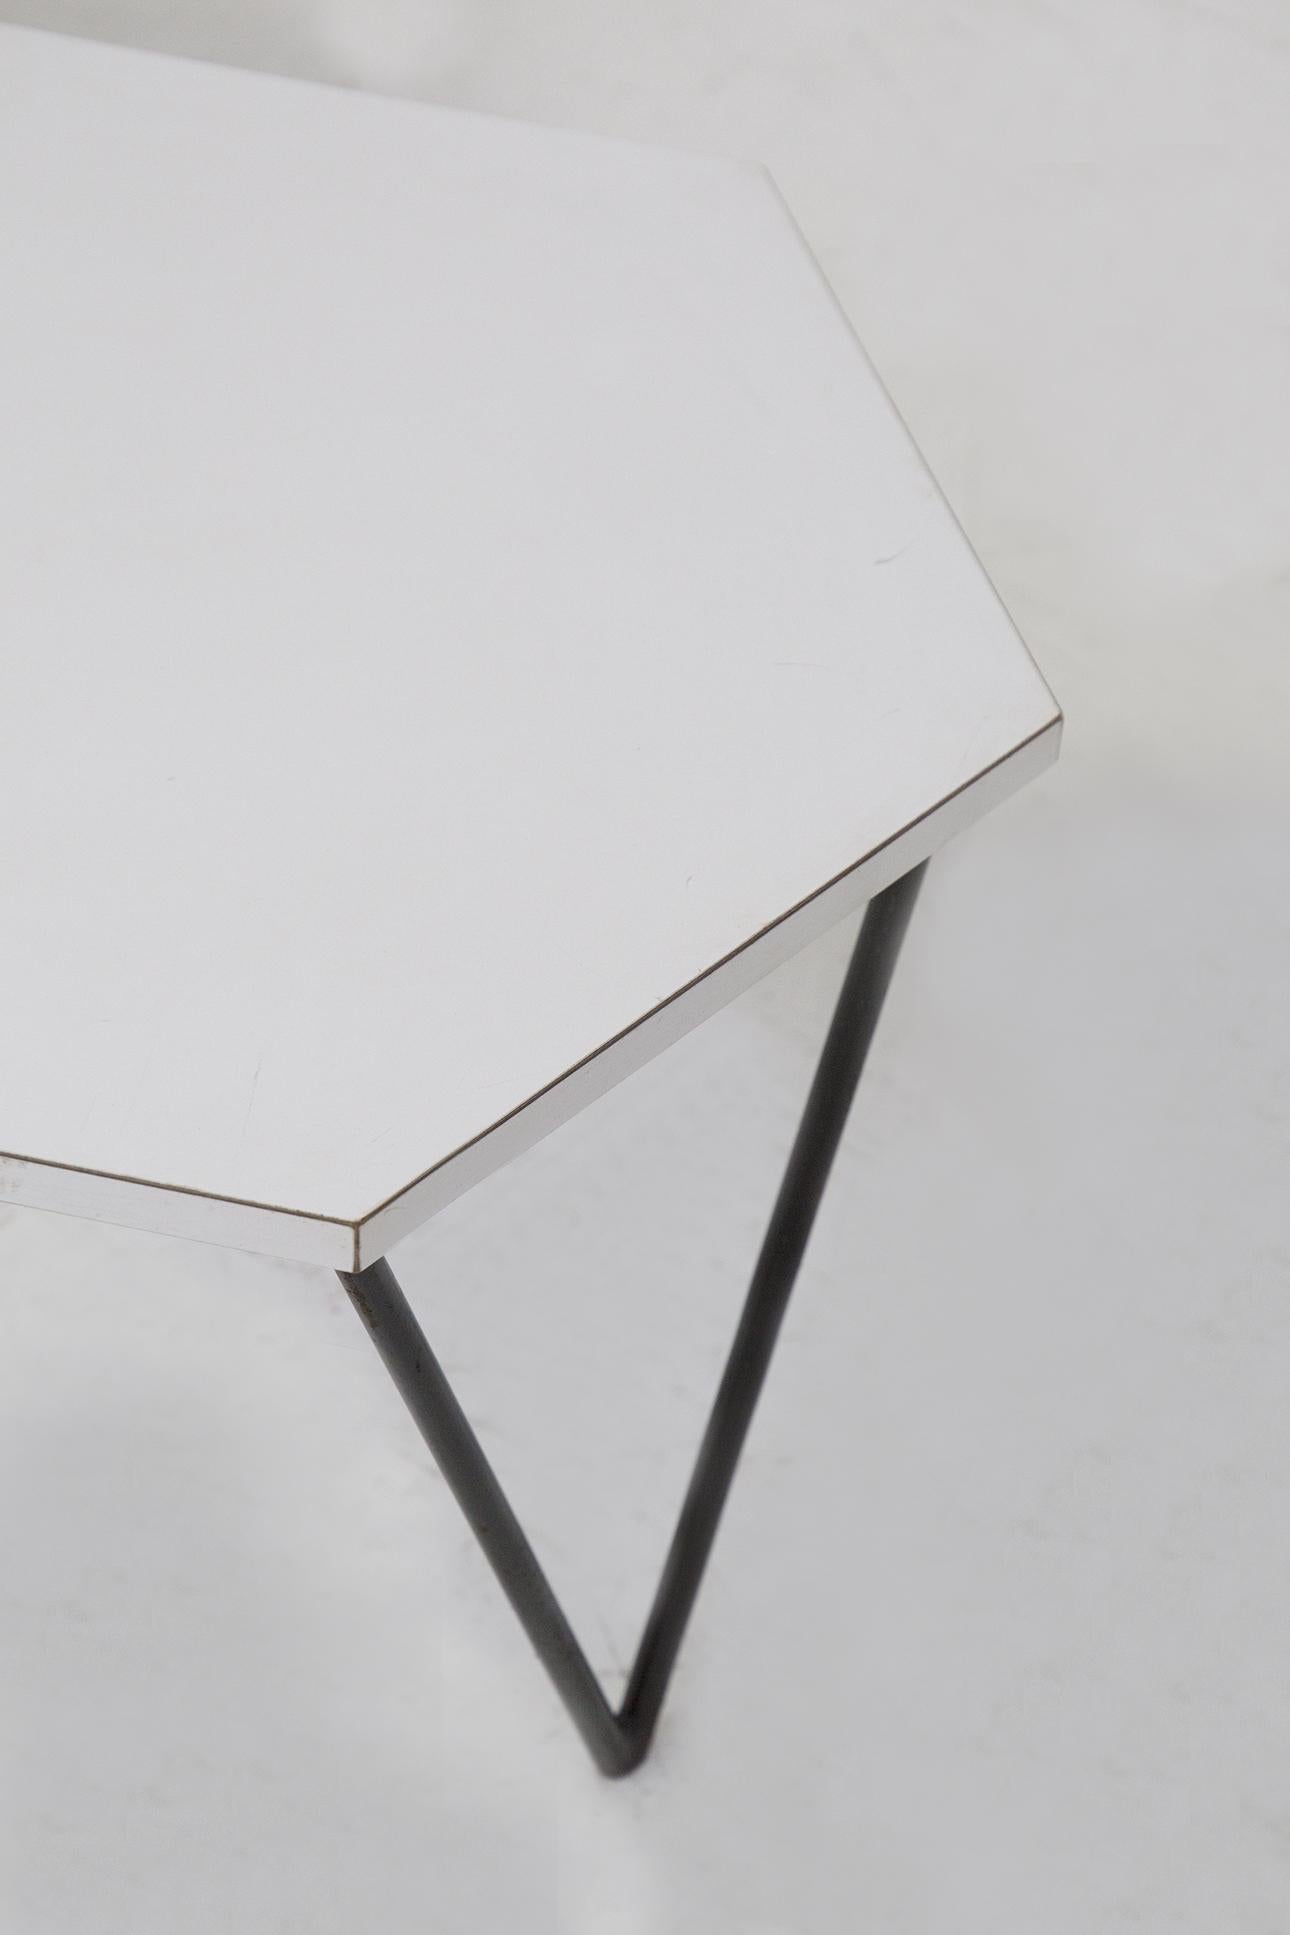 Mid-Century Modern Gio Ponti for Isa Bergamo White Hexagonal Coffee Tables, Original Label